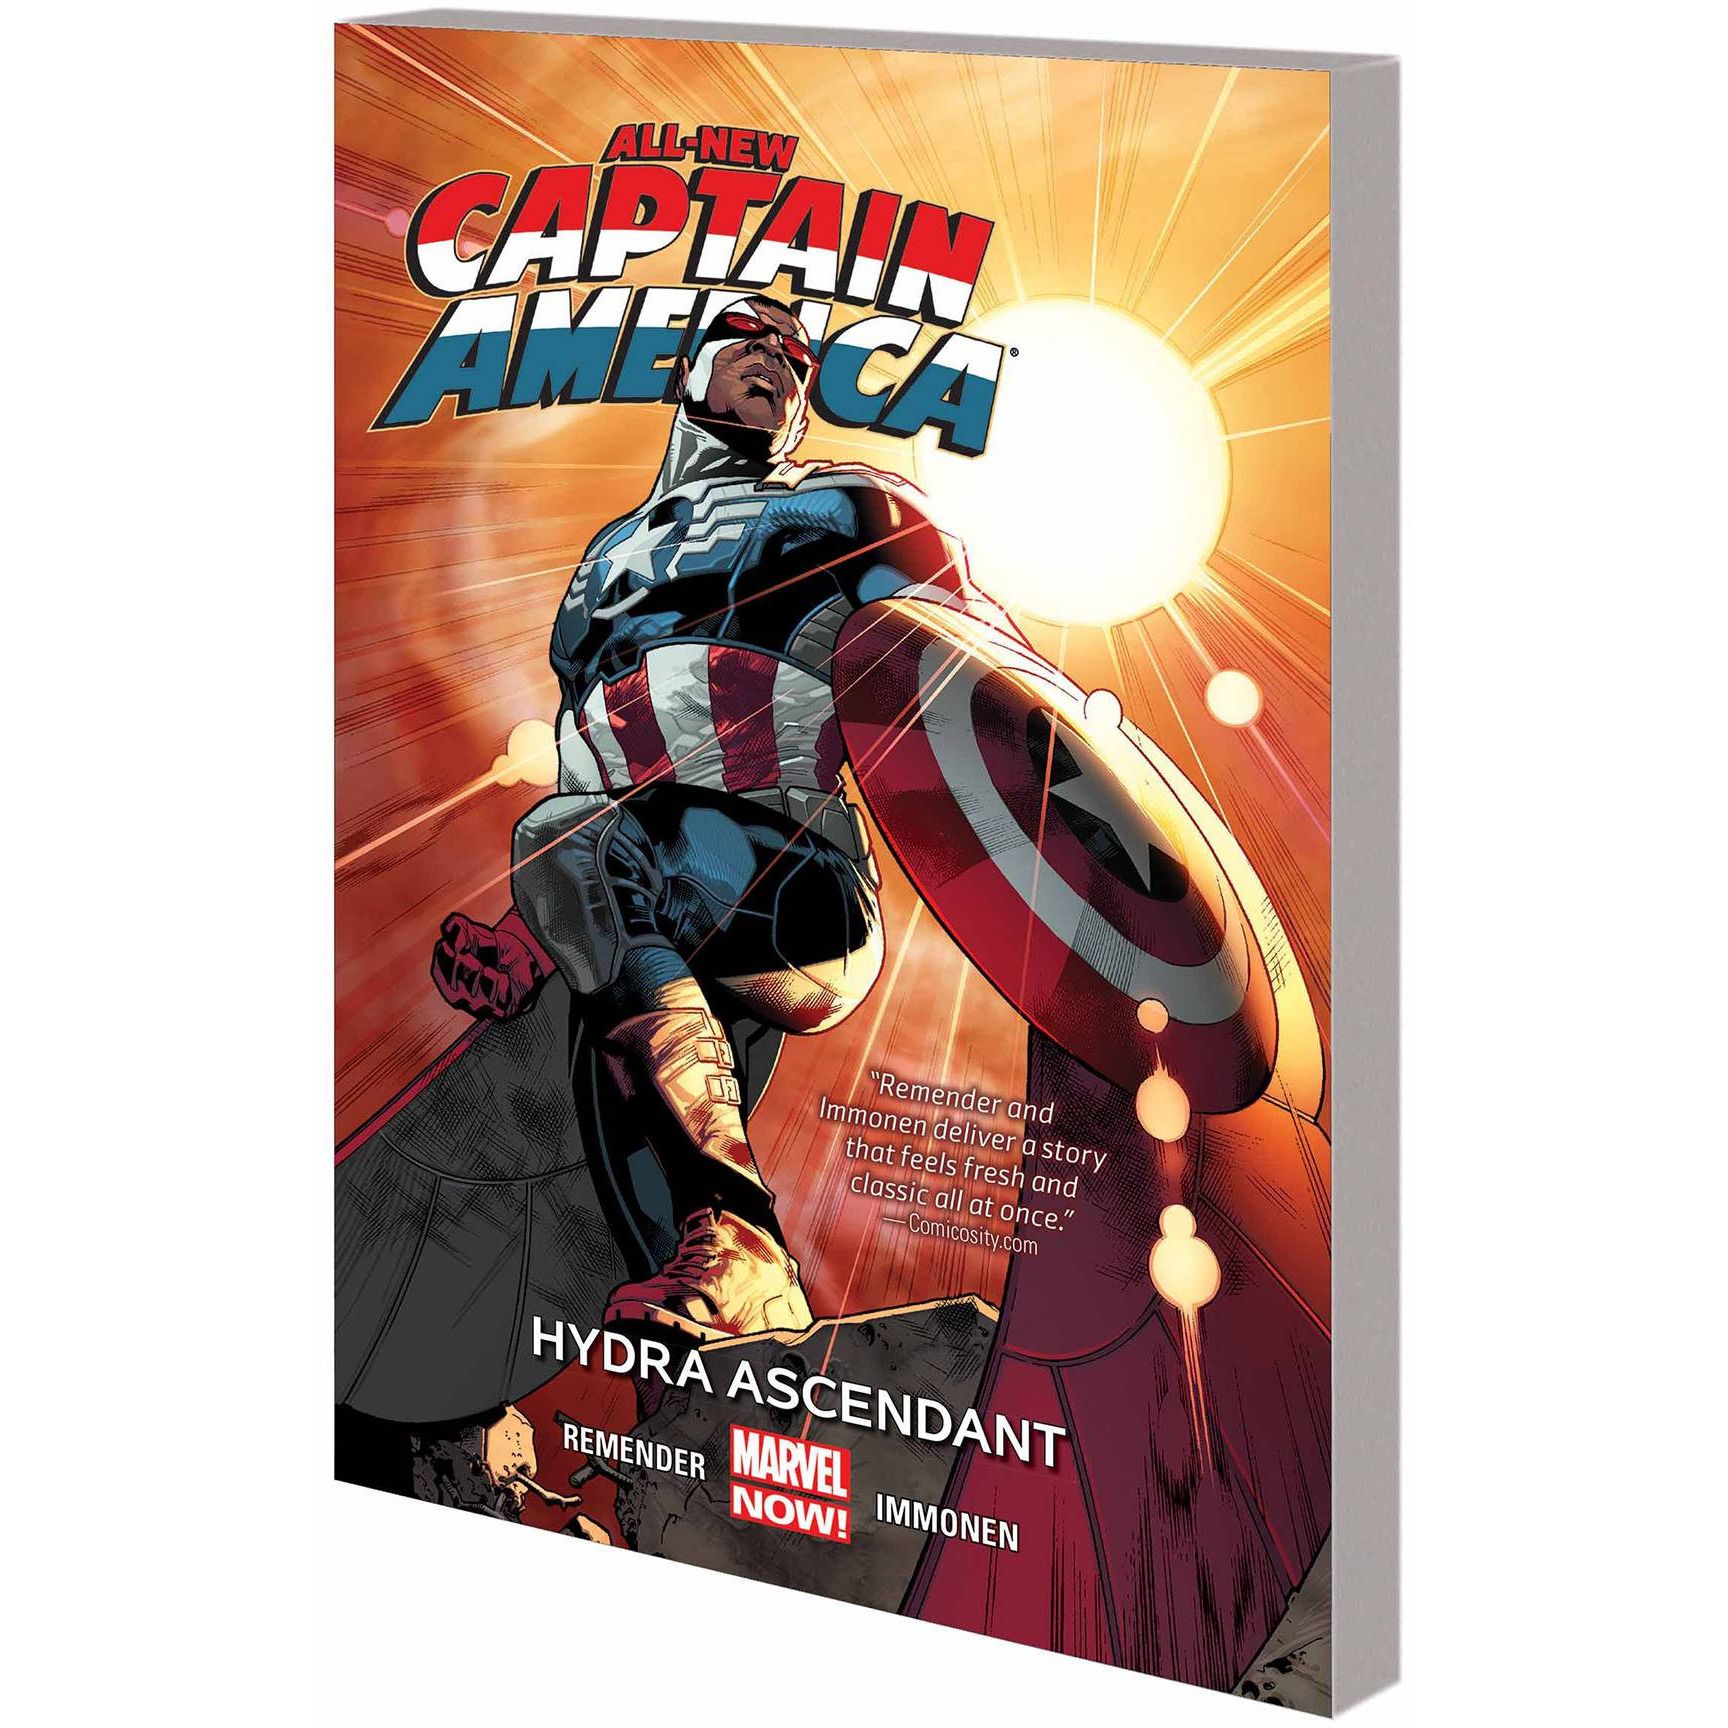  All New Captain America Hydra Ascendant Vol. 1 TP Uncanny!